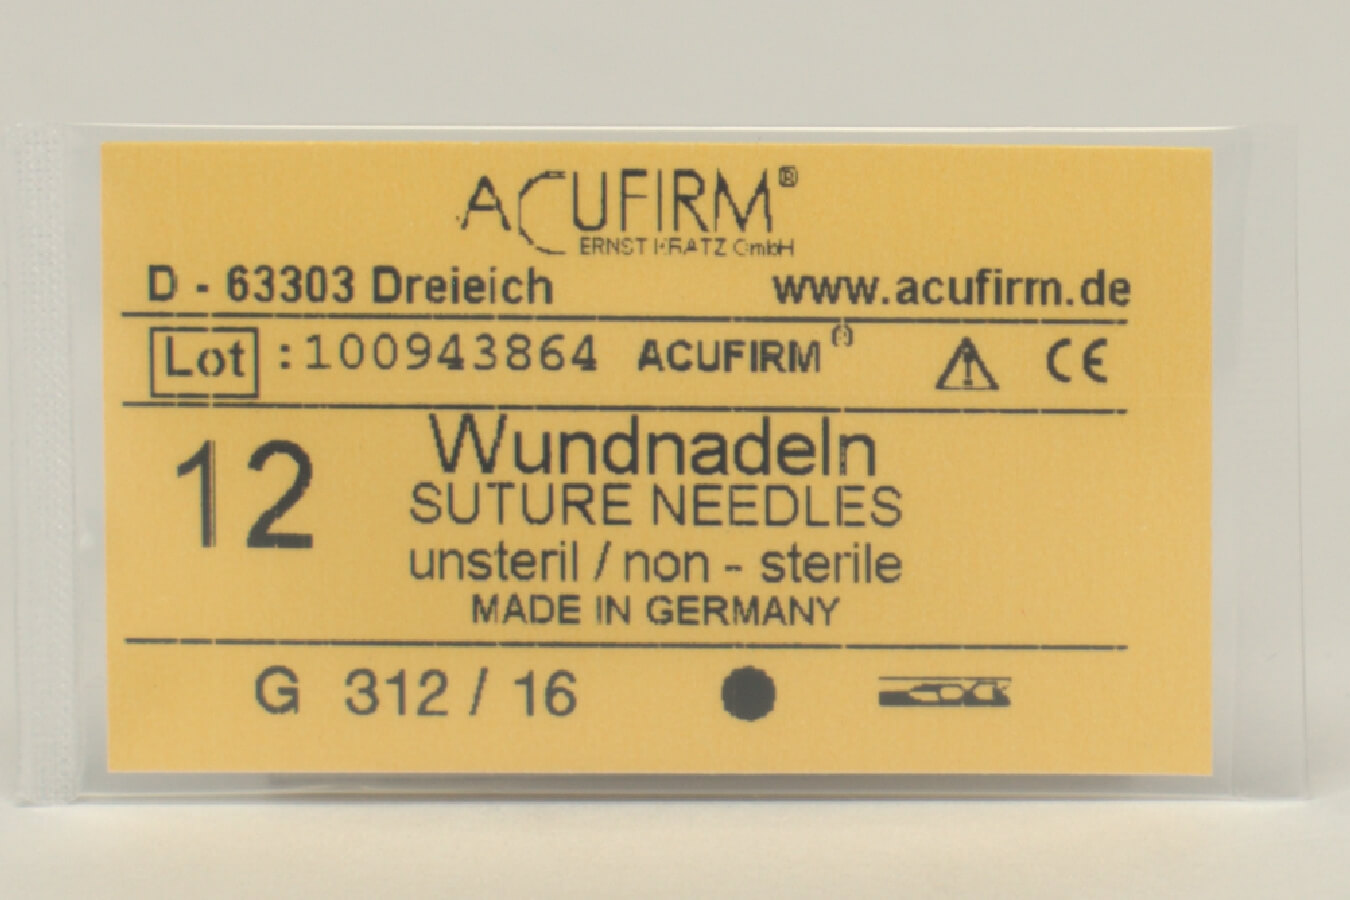 Wundnadeln Acufirm G 312/16 Dtz